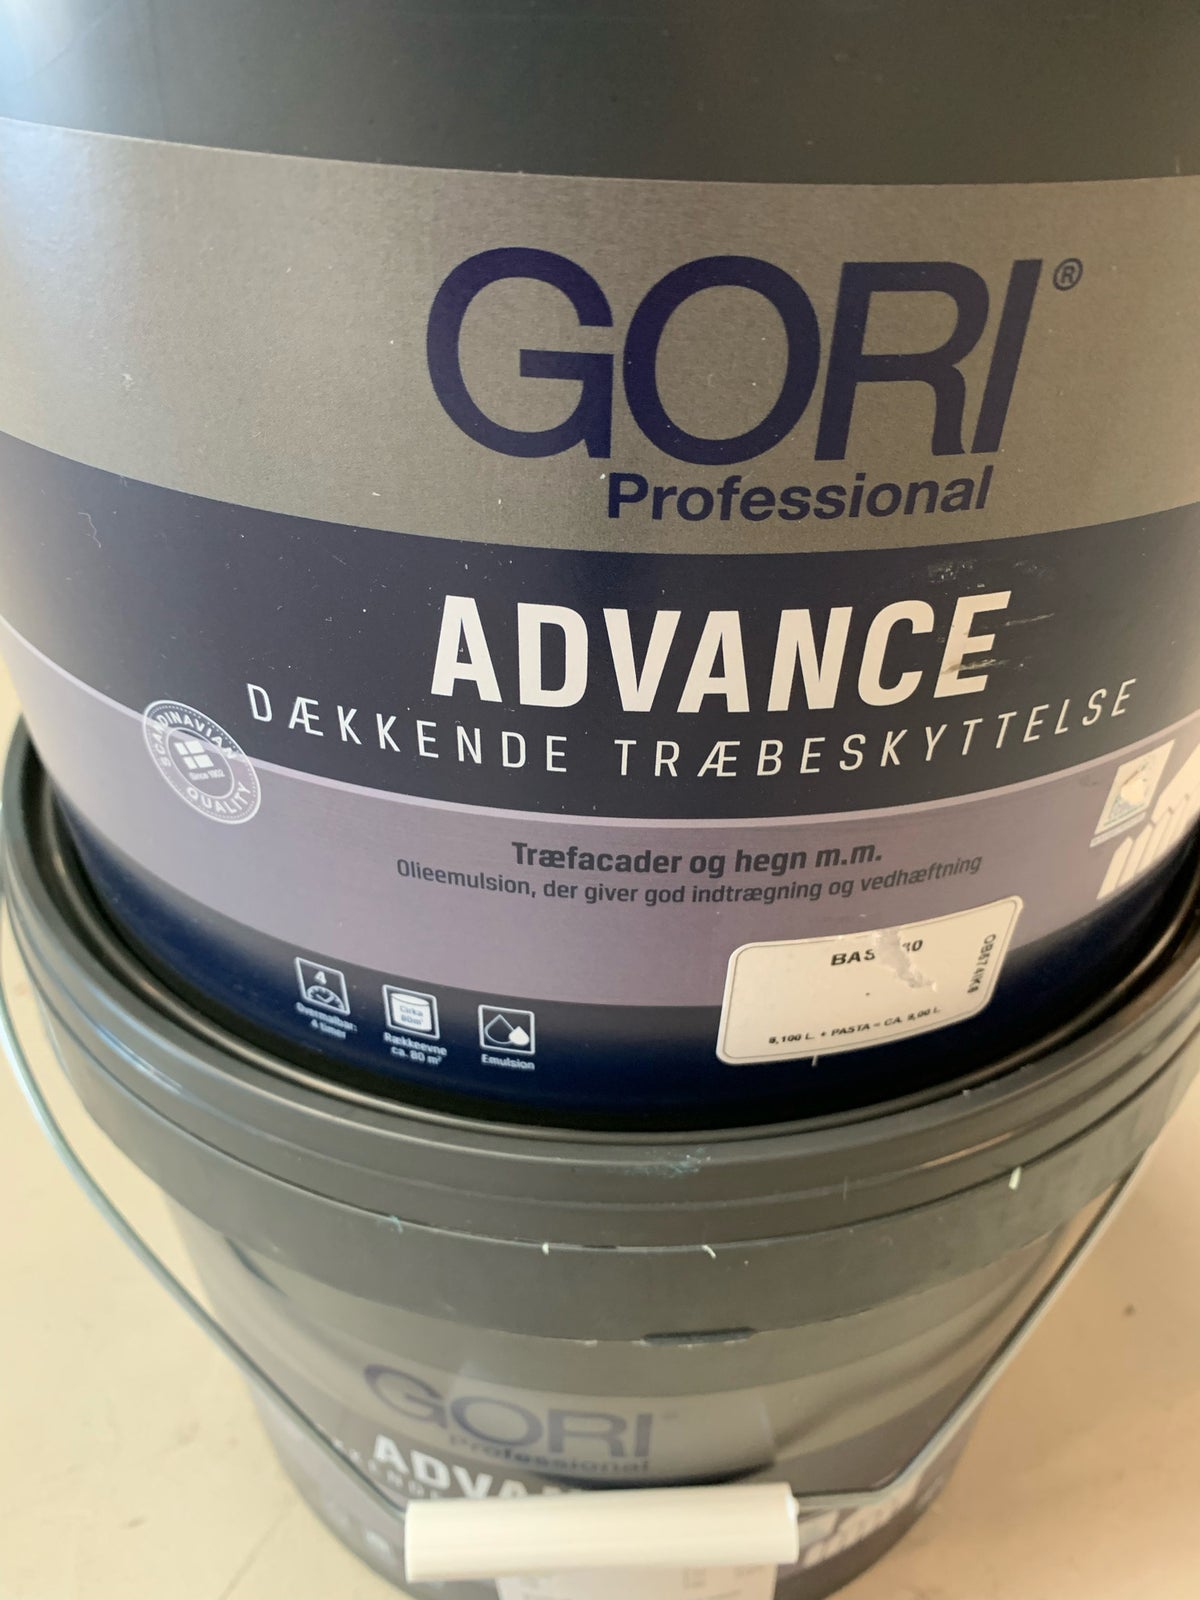 Træbeskyttelse , Gori prof advance, 10 liter